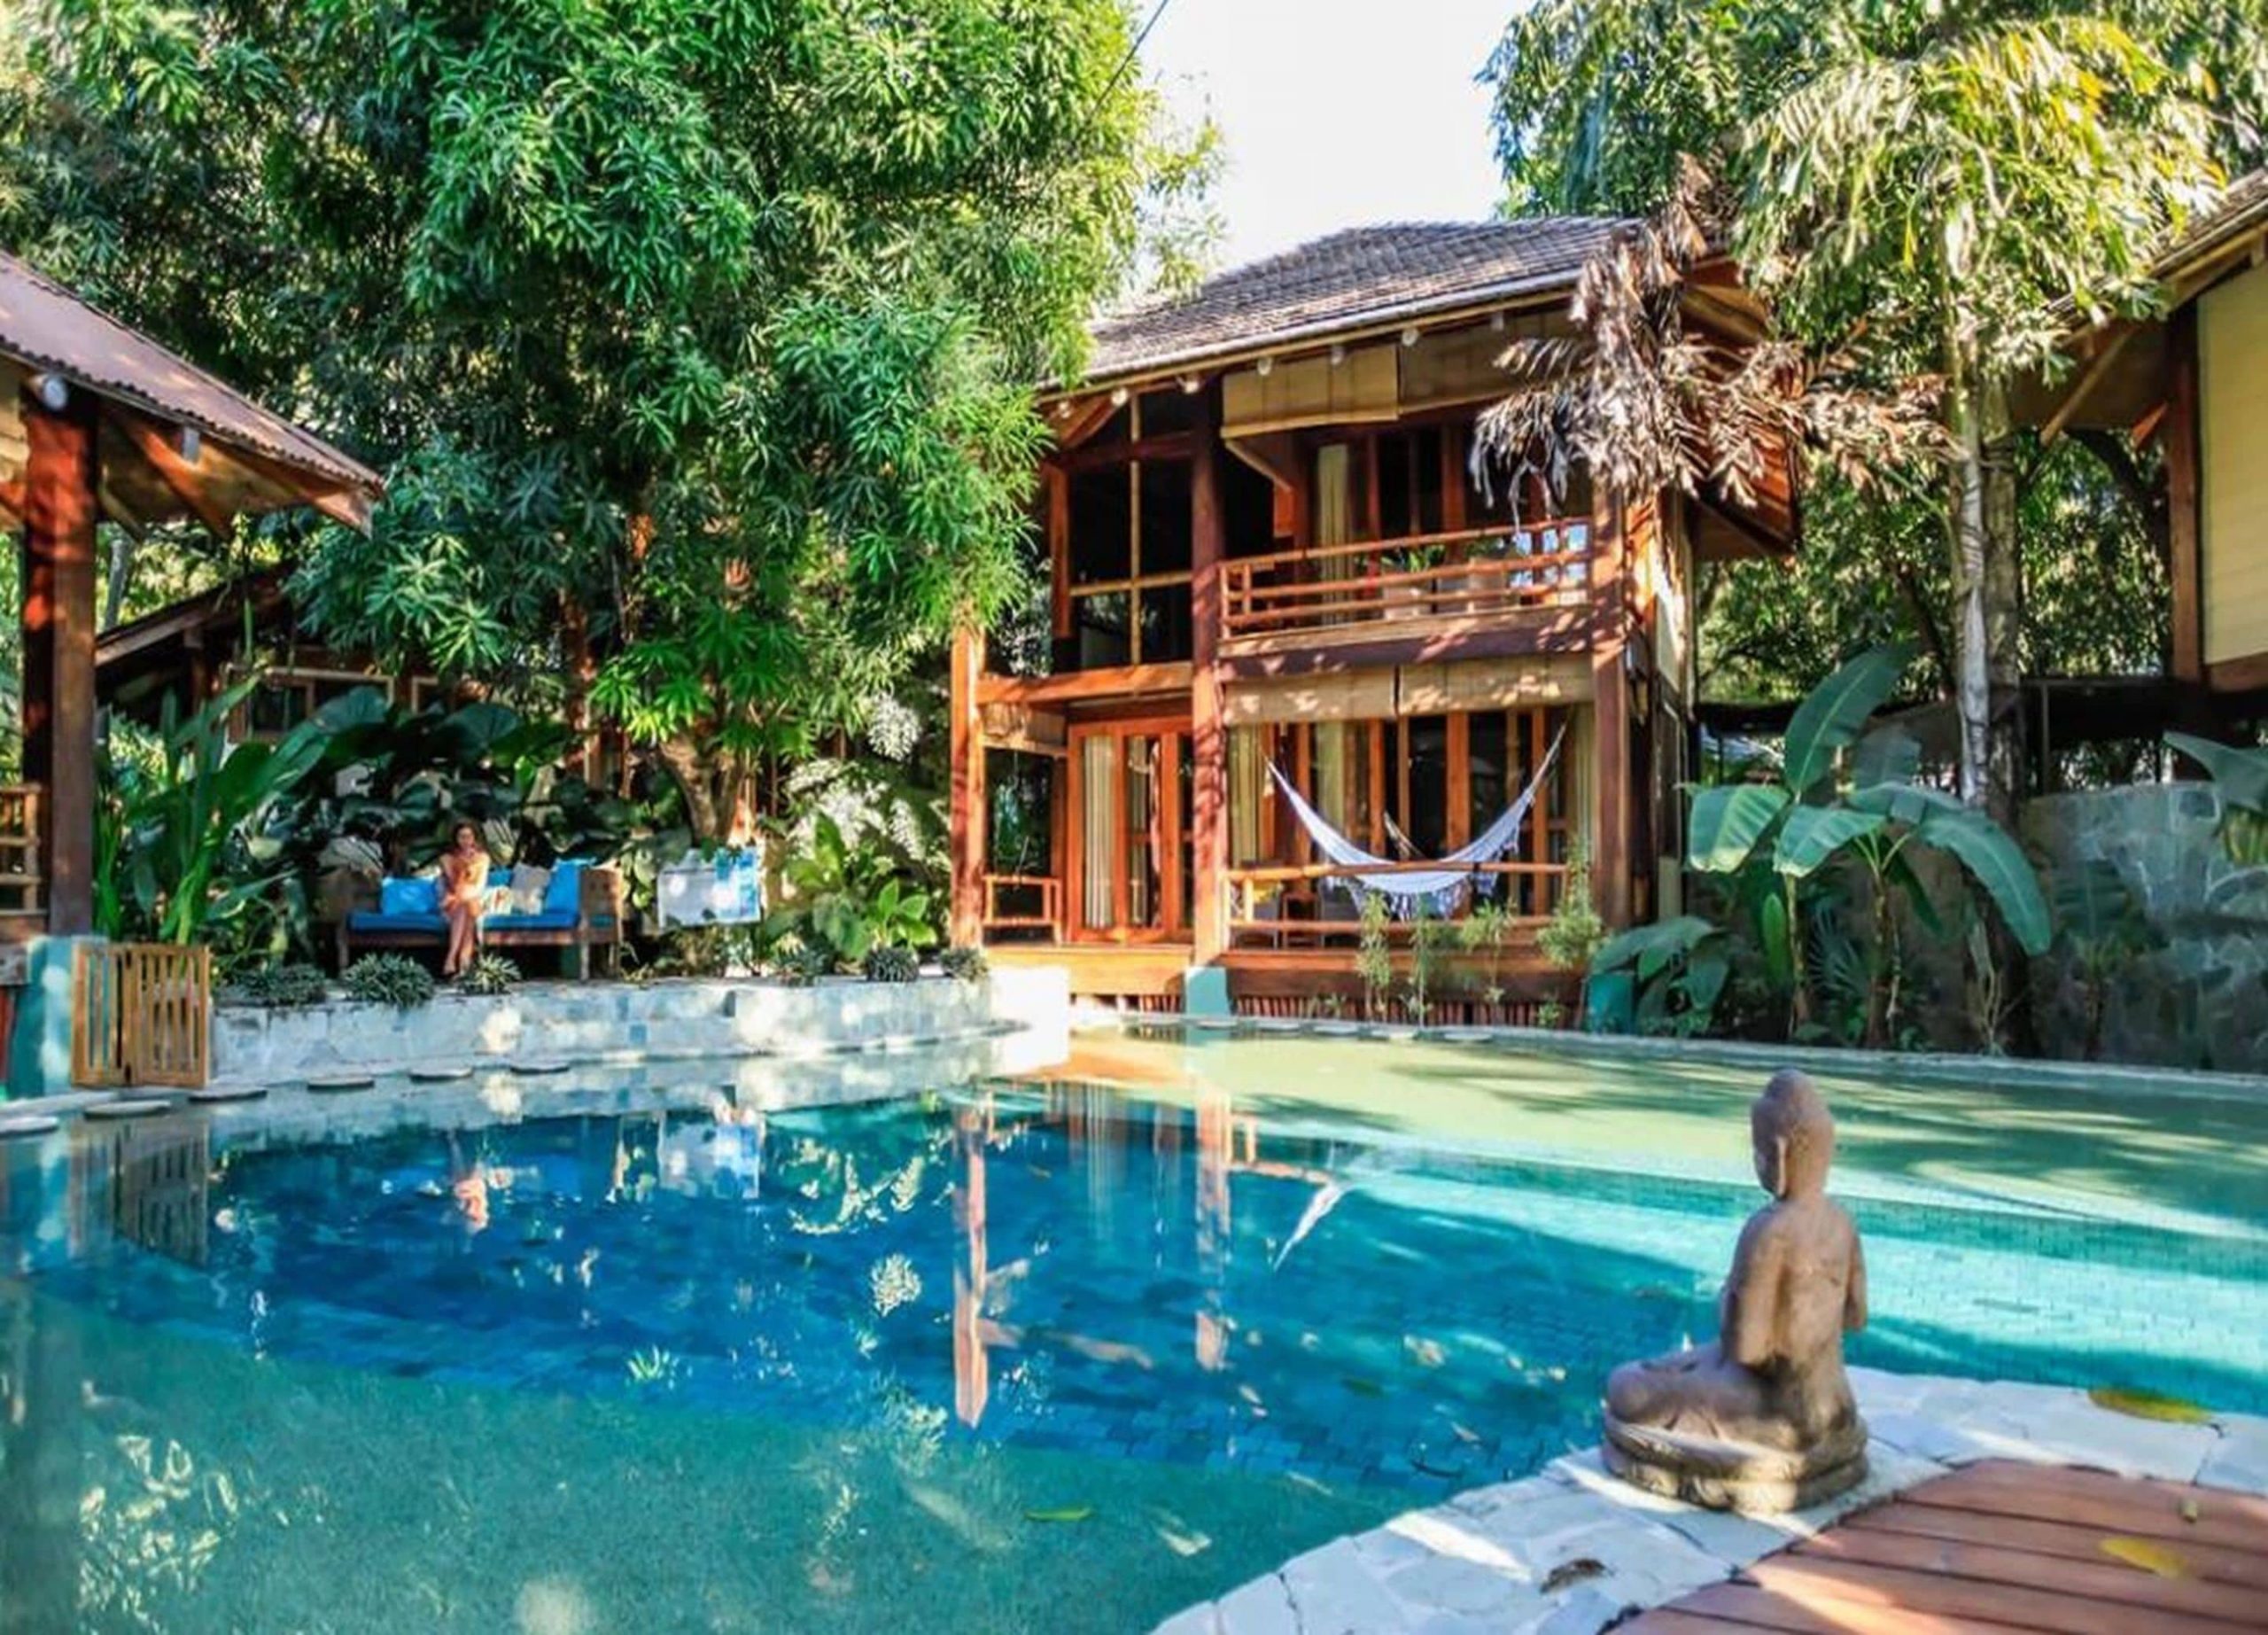 The outdoor pool area at Pranamar Villas and Yoga Retreat in Costa Rica with private villa, hammock, and ancient statue.